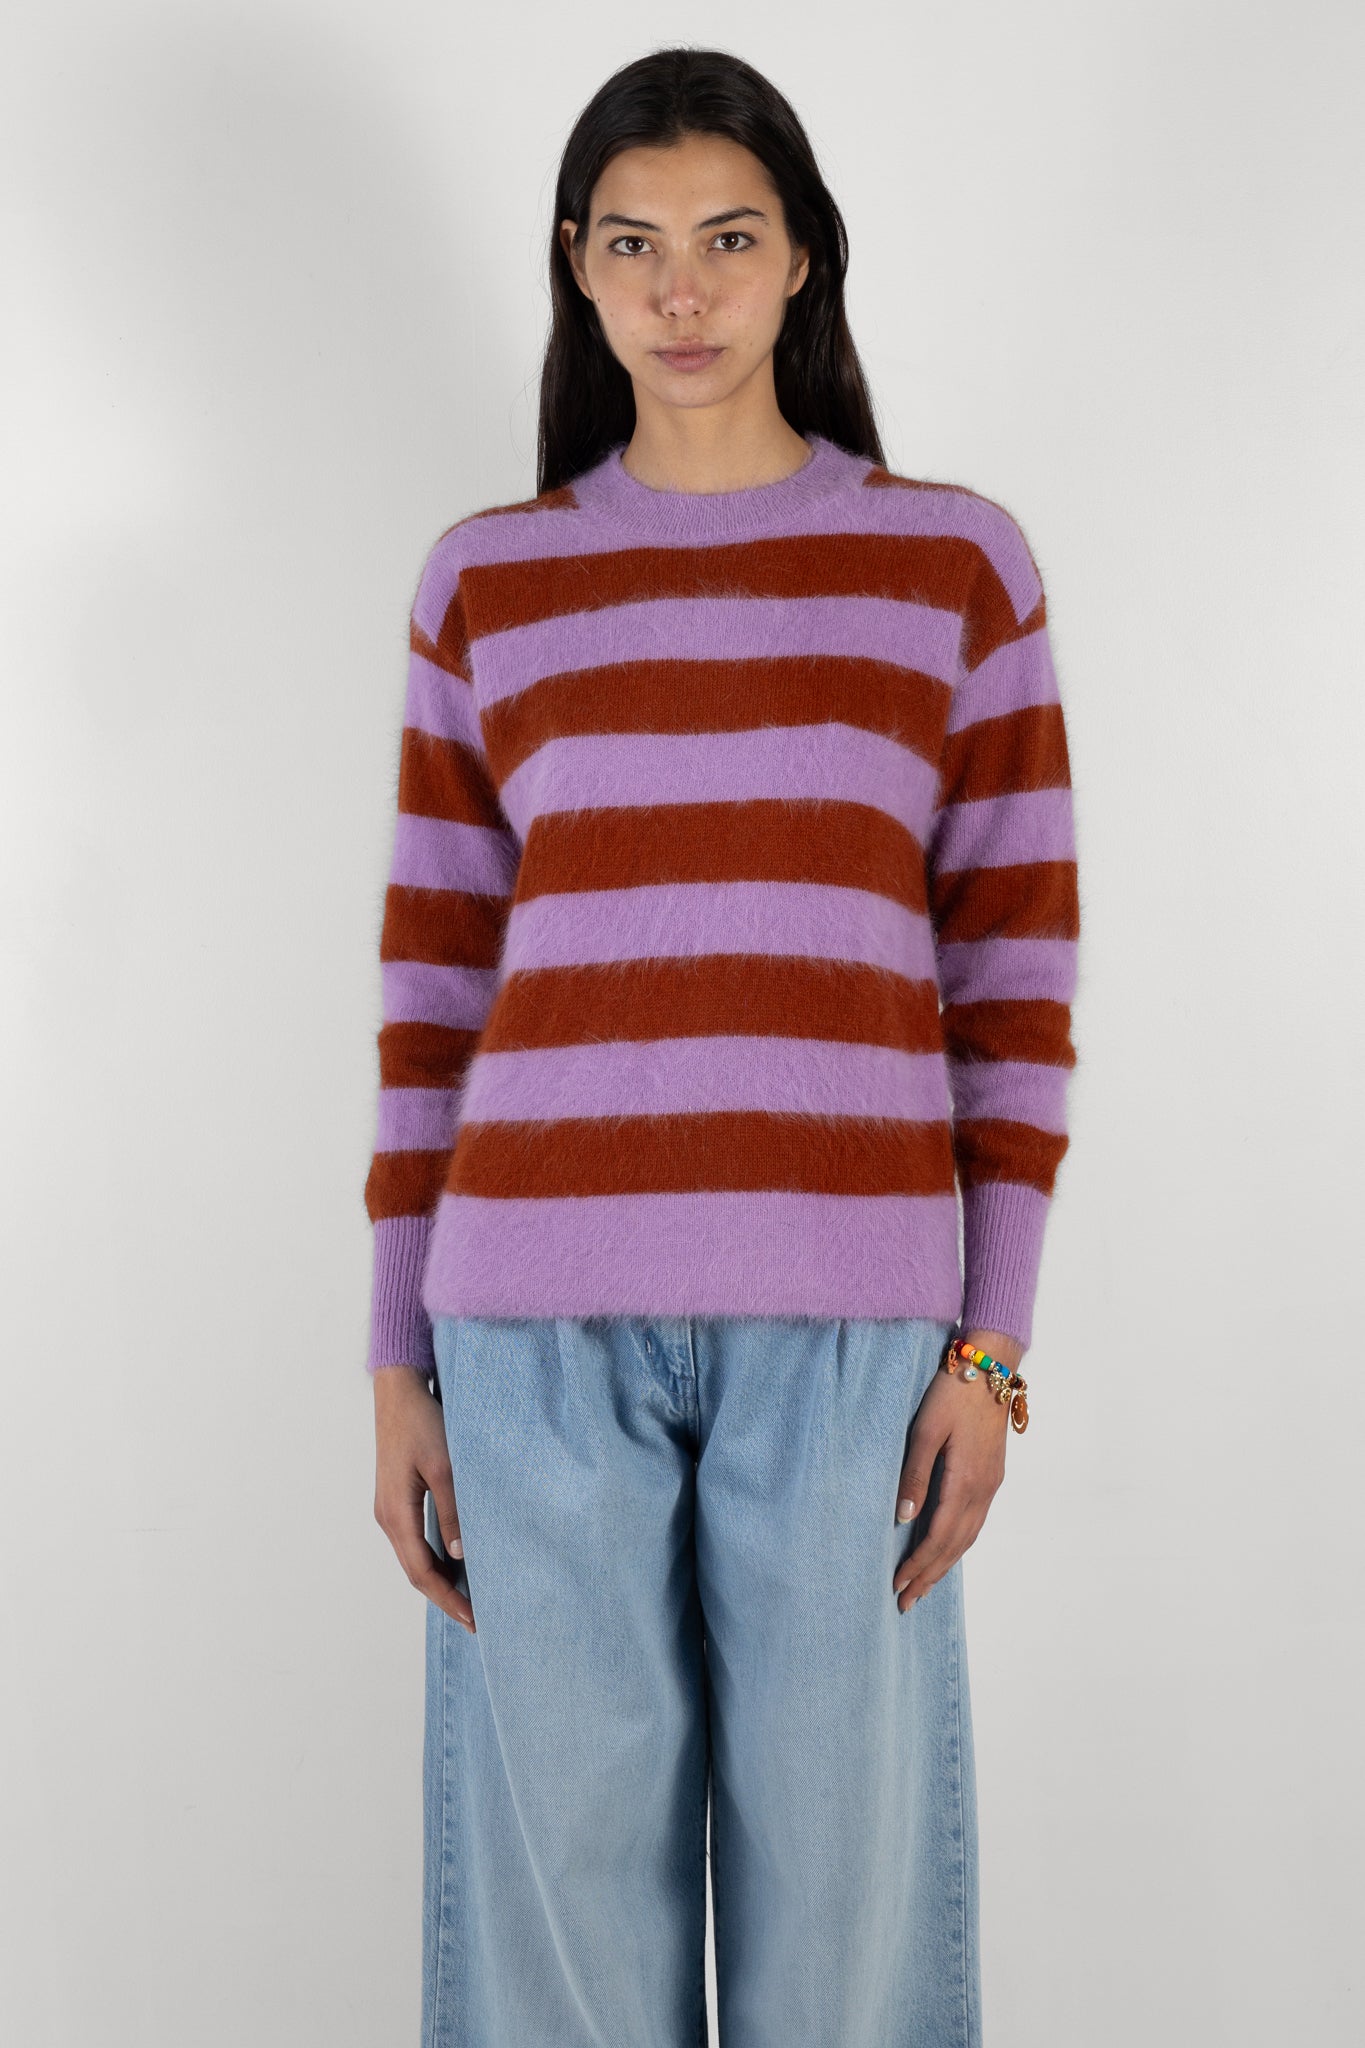 womens jumper | Bellerose Datipe Knit | The Standard Store